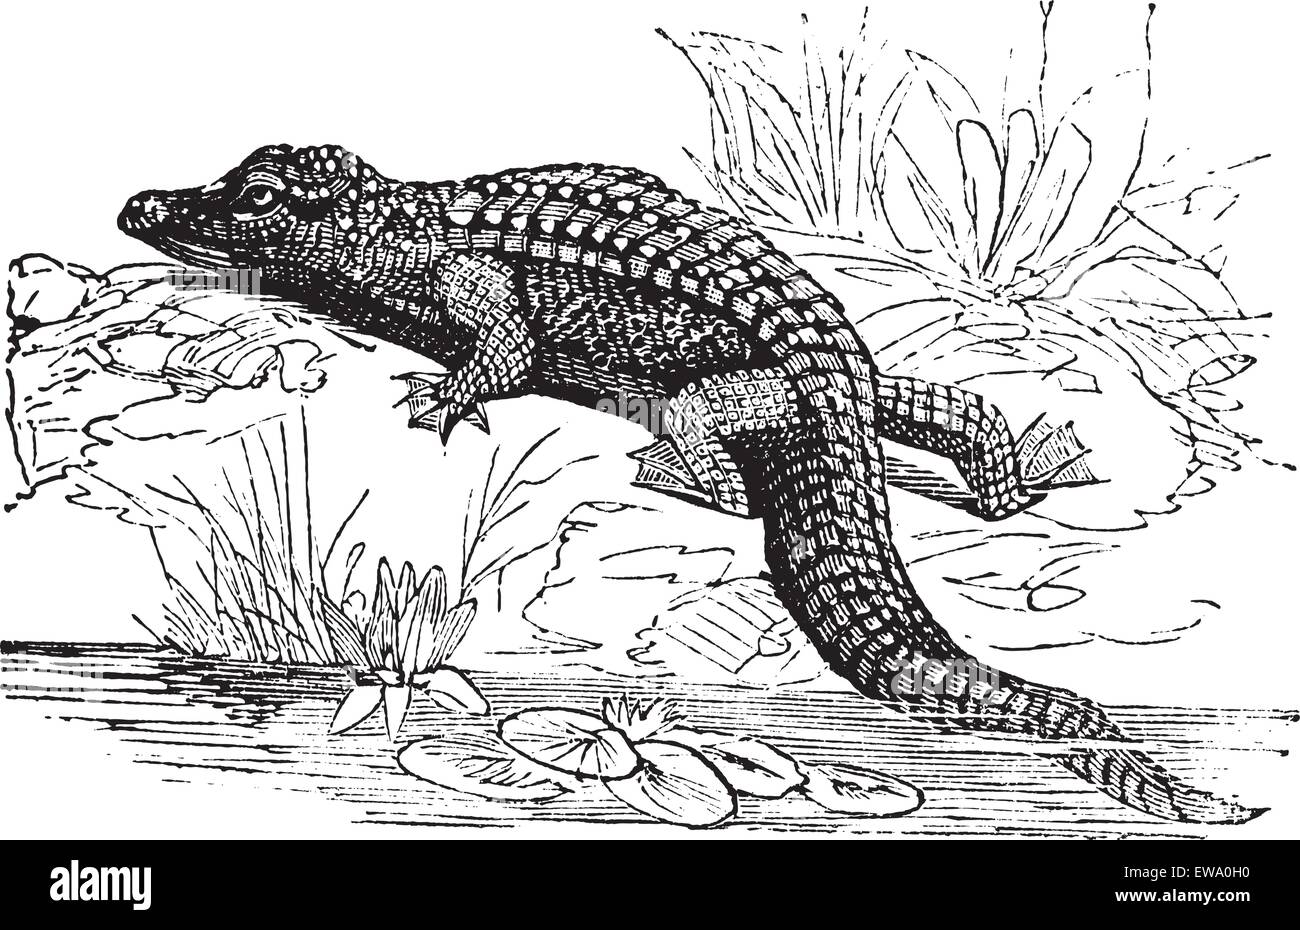 Nile Crocodile or Crocodylus niloticus, vintage engraving. Old engraved illustration of a Nile Crocodile. Stock Vector